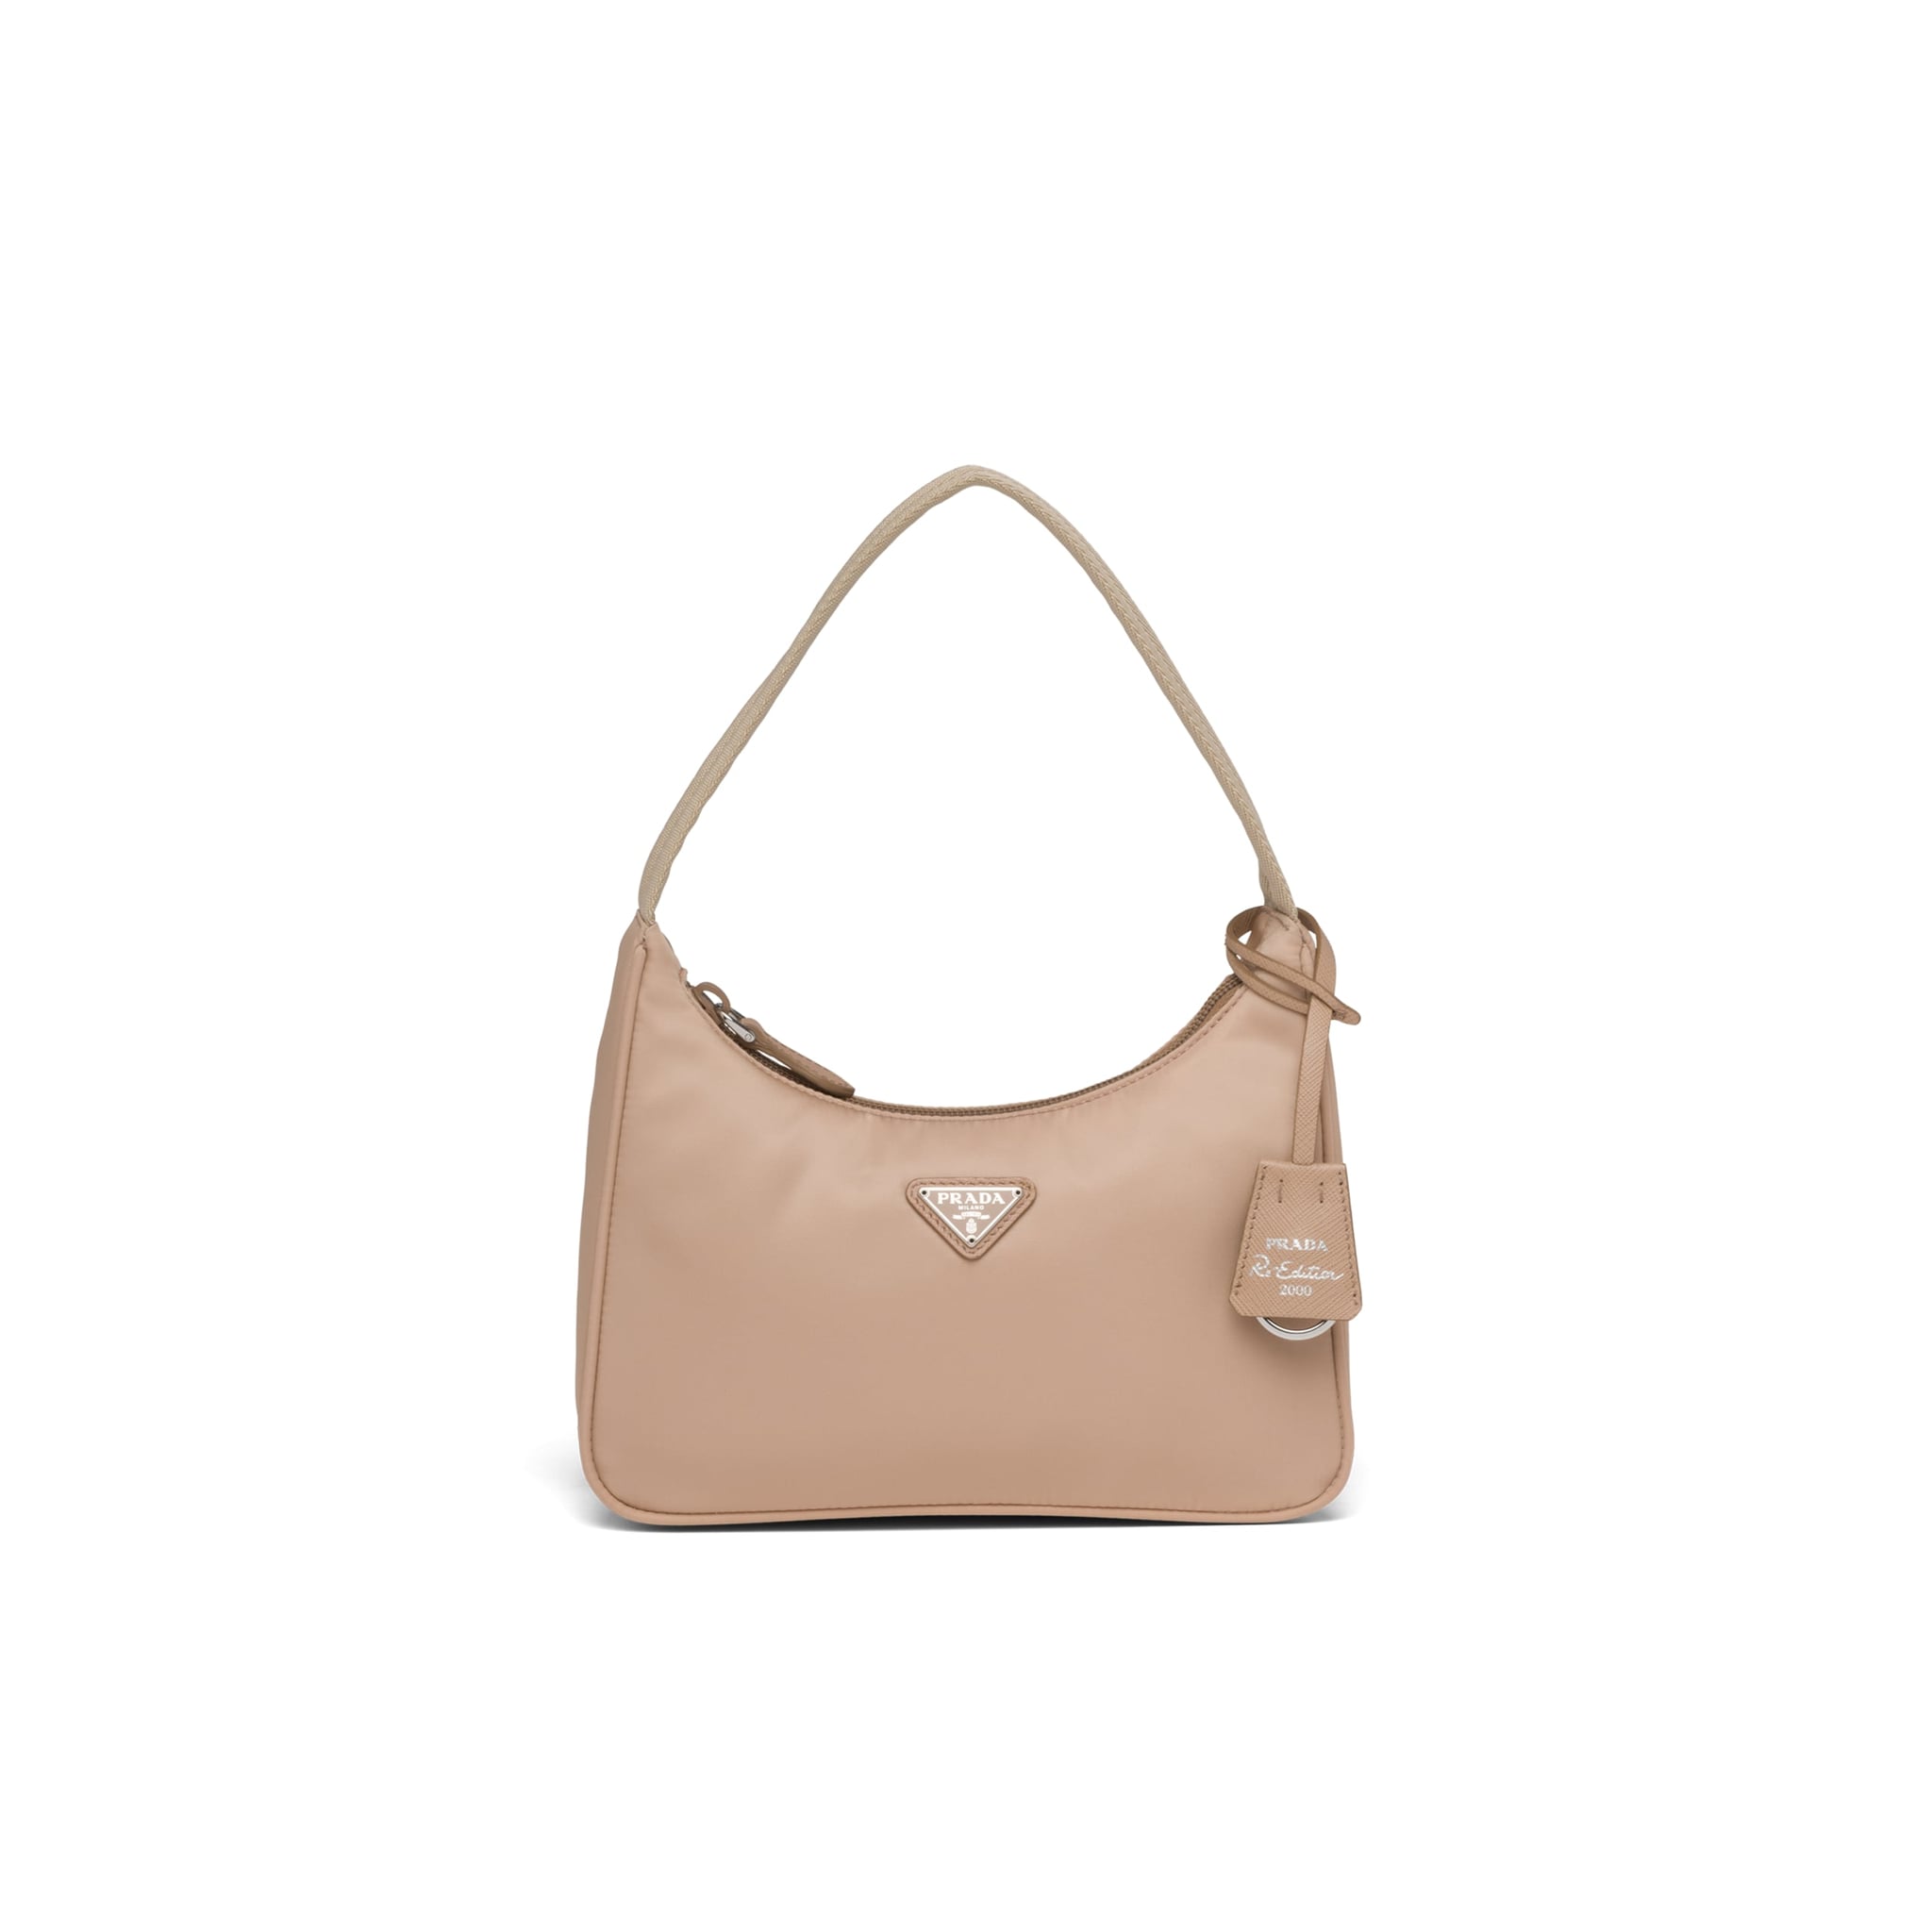 Prada Re-Edition Bags | POPSUGAR Fashion